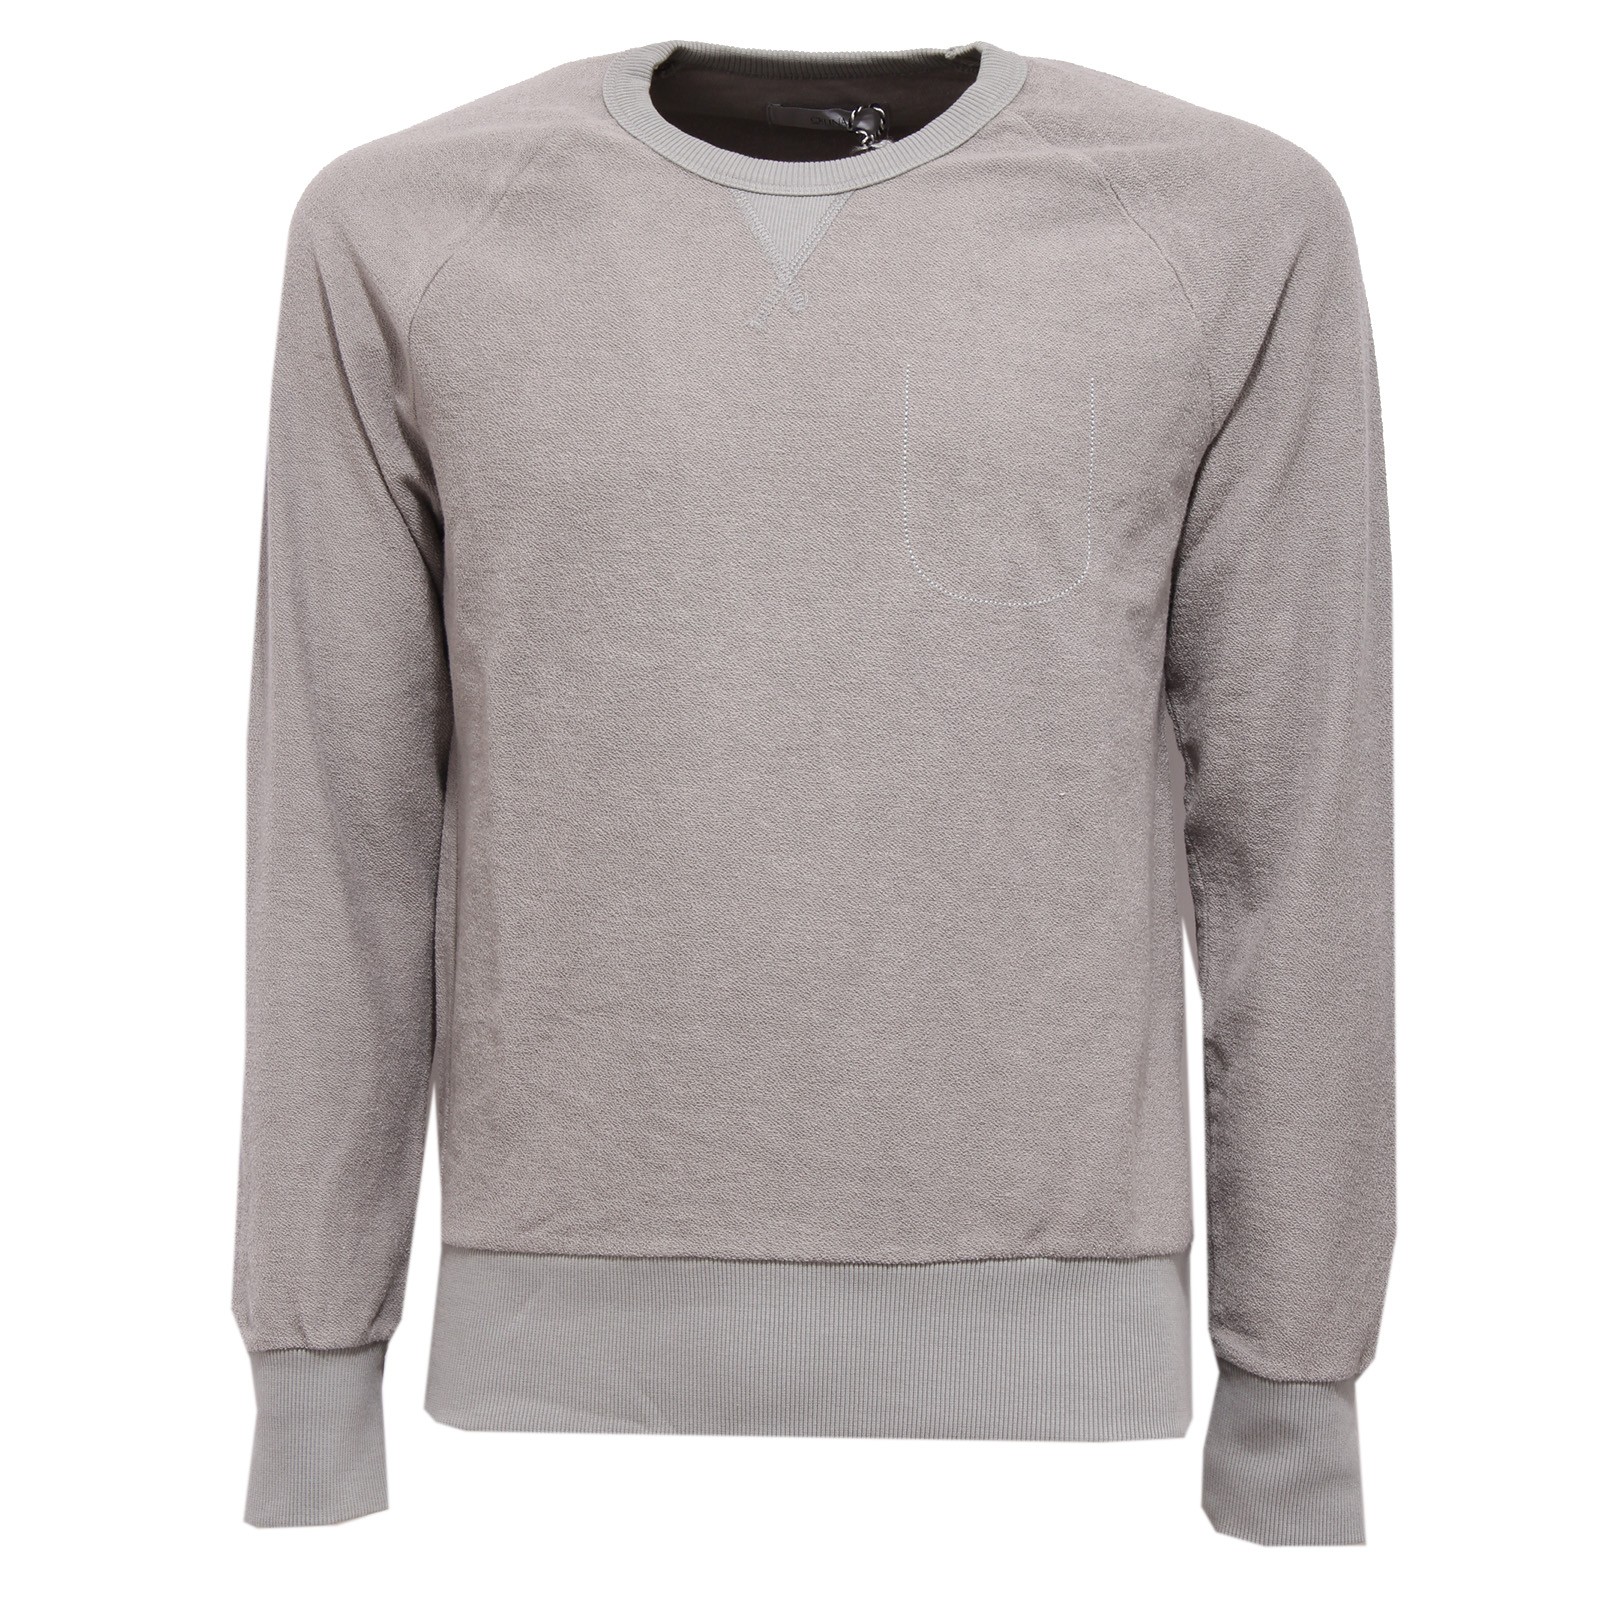 8668J felpa uomo CRUNA OVERTURNED cotton grey sweatshirt man | eBay